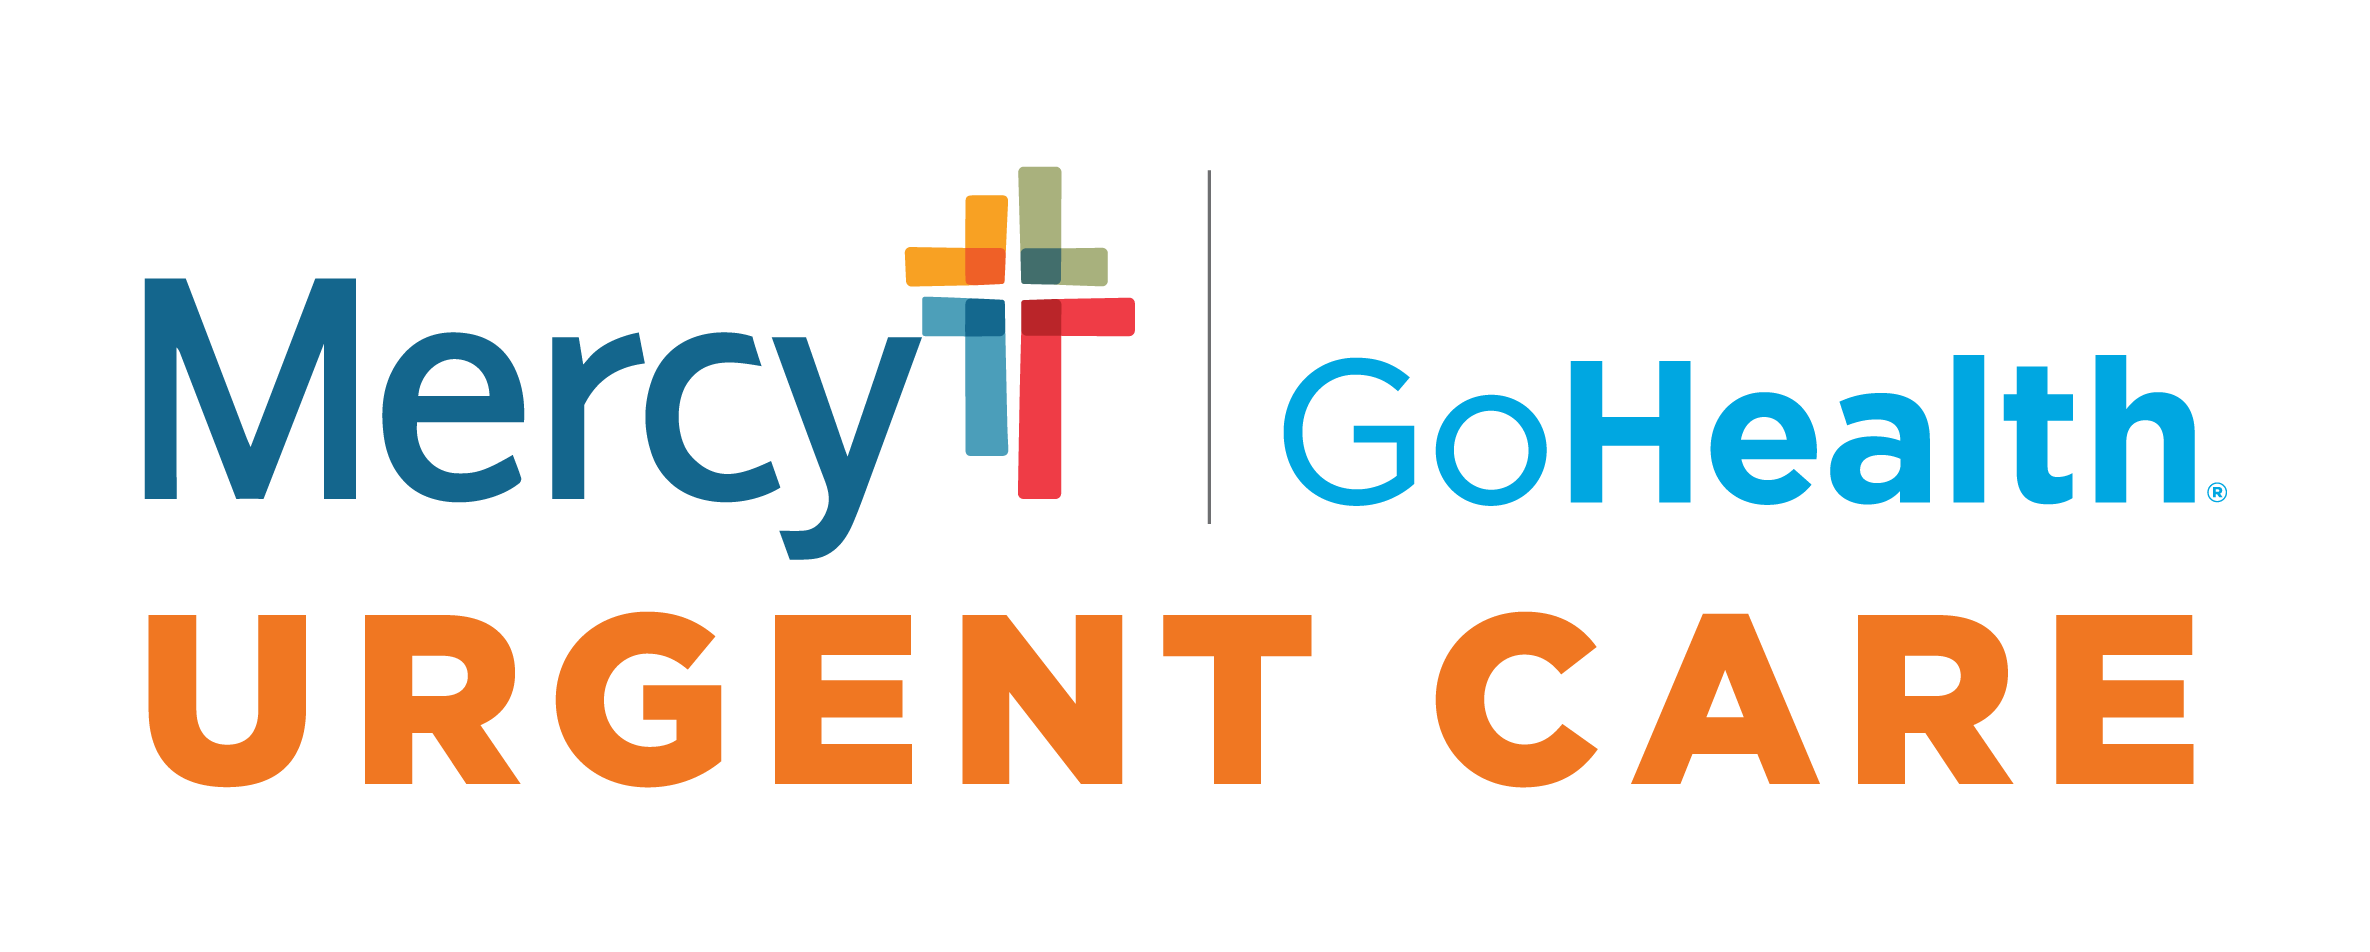 Mercy Health- Gohealth Urgent Care - Range Line Logo